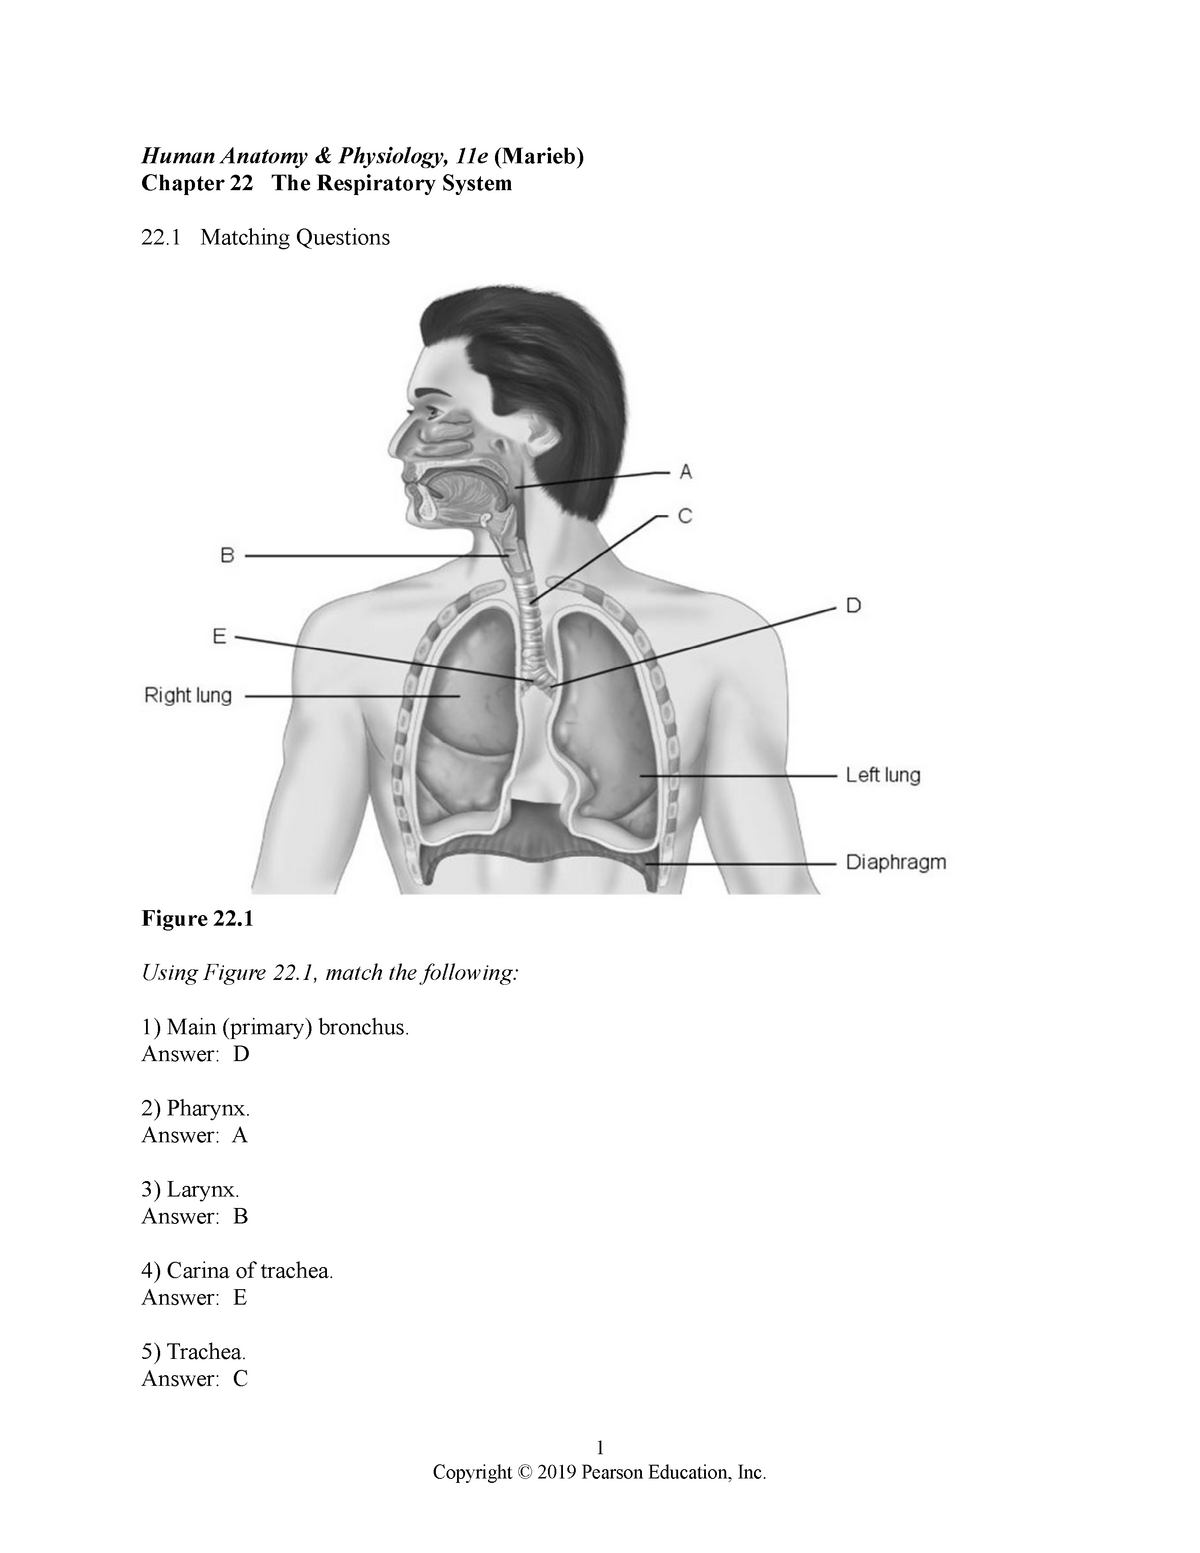 Angle of Louis  Human anatomy and physiology, Anatomy and physiology,  Respiratory therapy